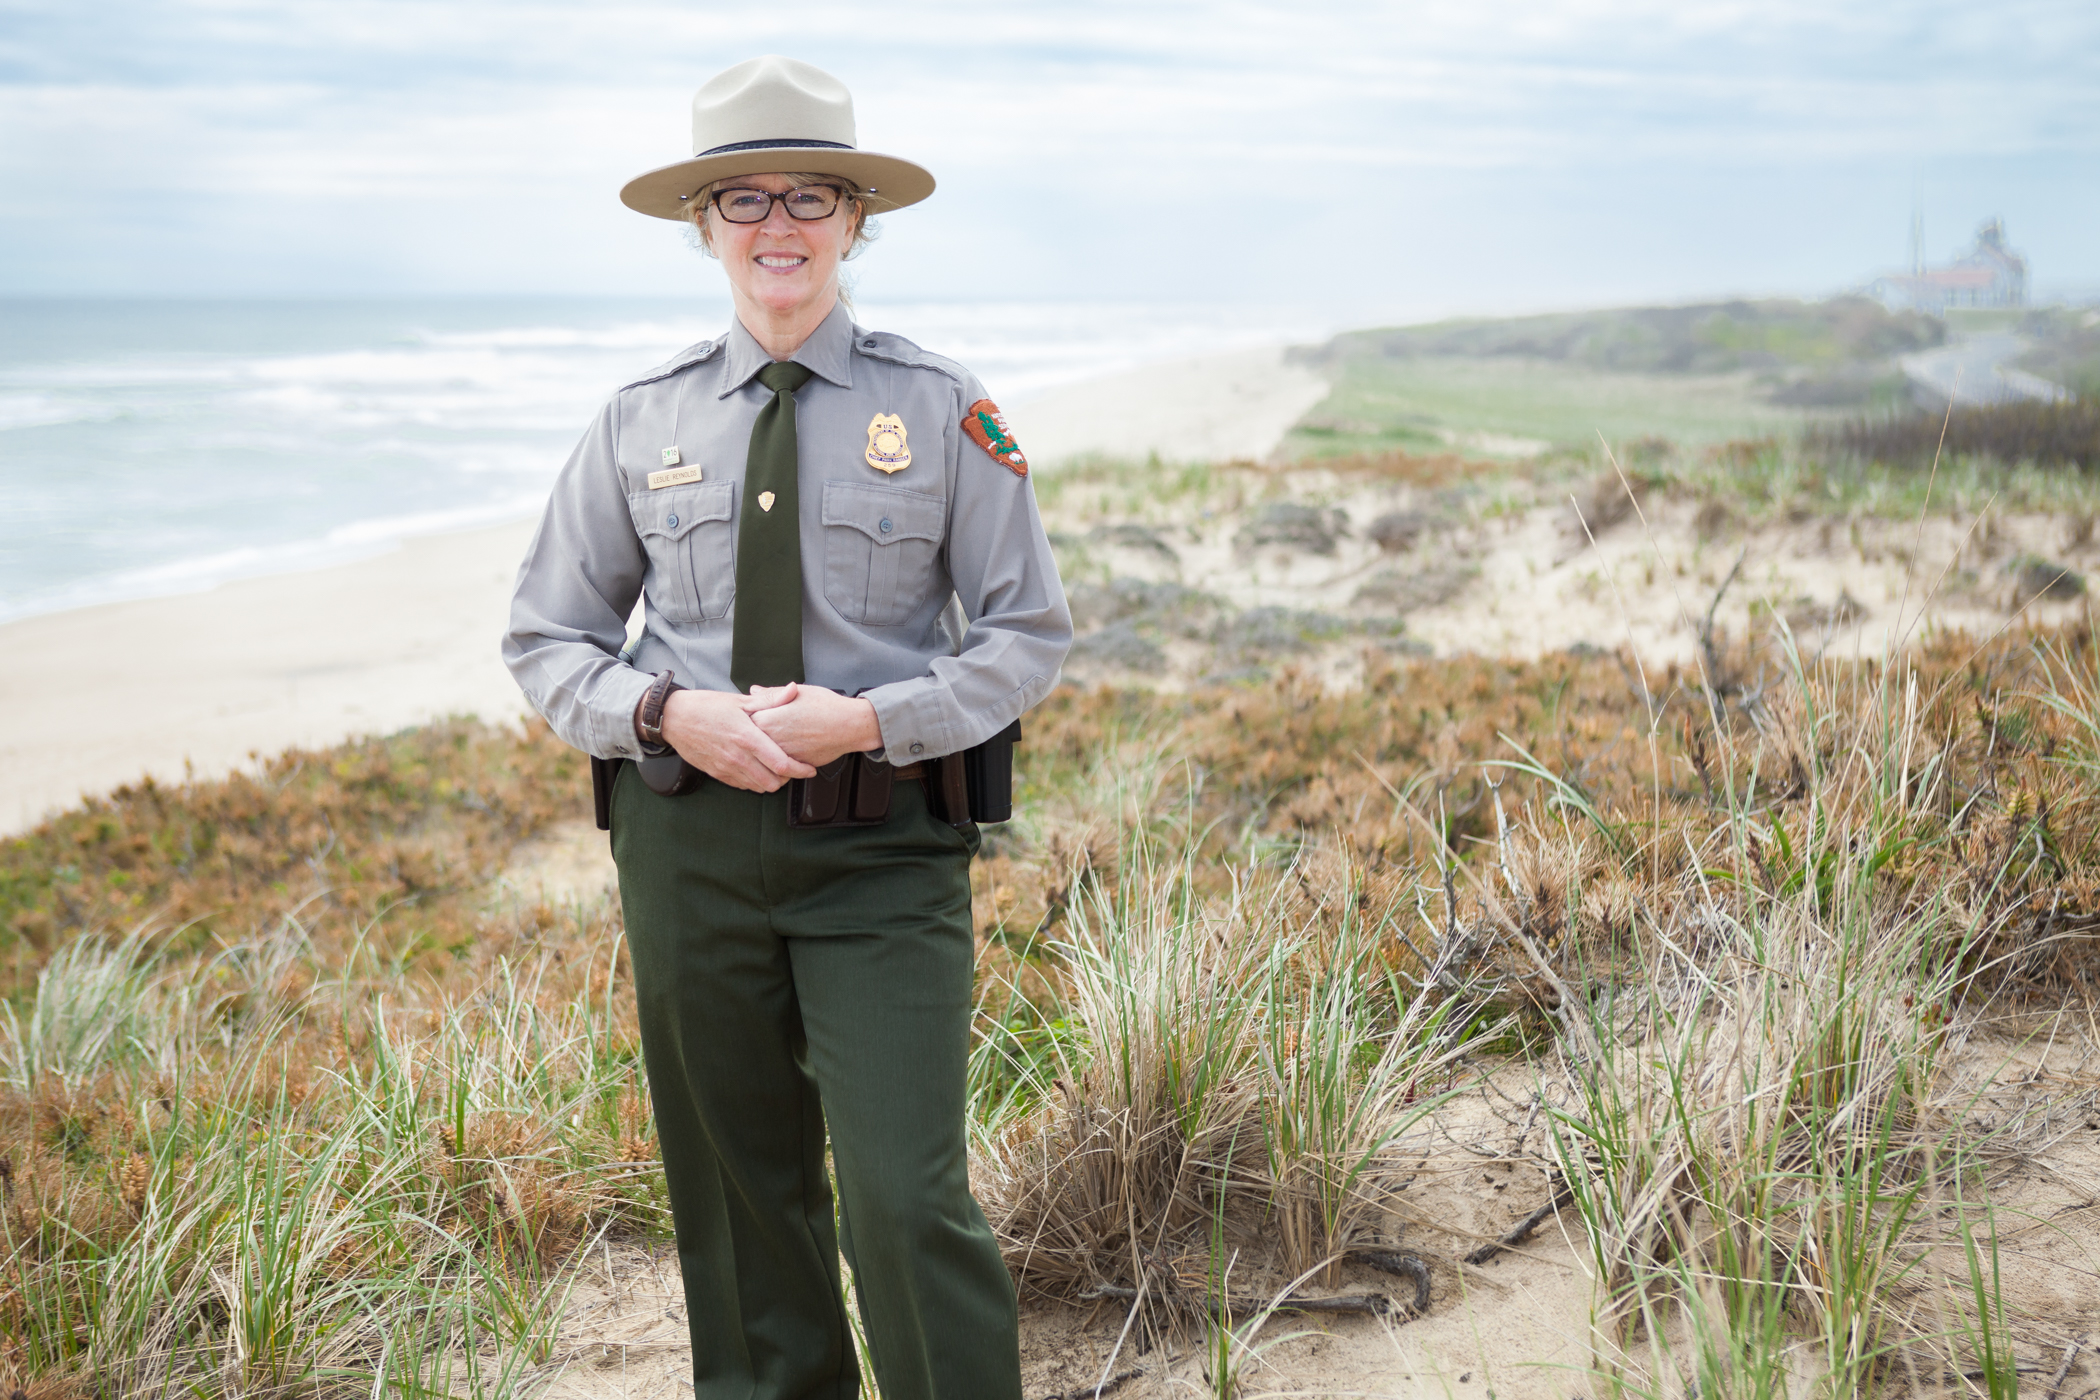 Woman in park ranger uniform on the beach